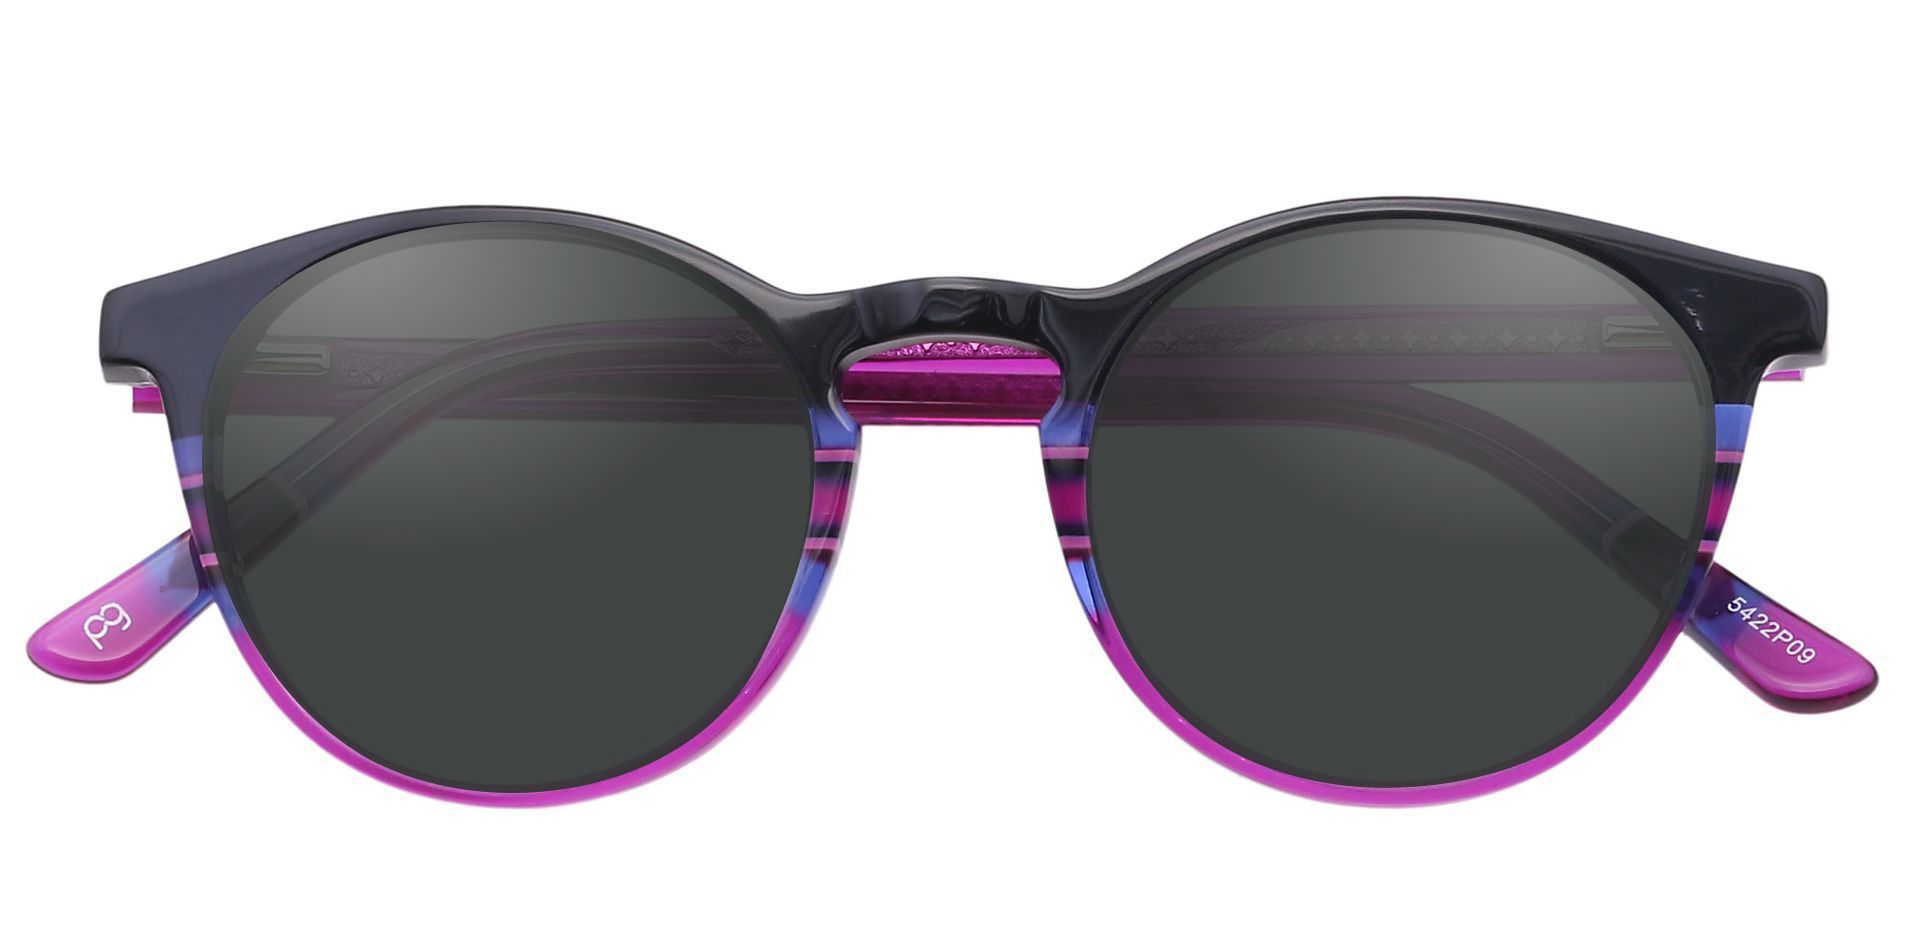 Jellie Round Prescription Sunglasses - Purple Frame With Gray Lenses